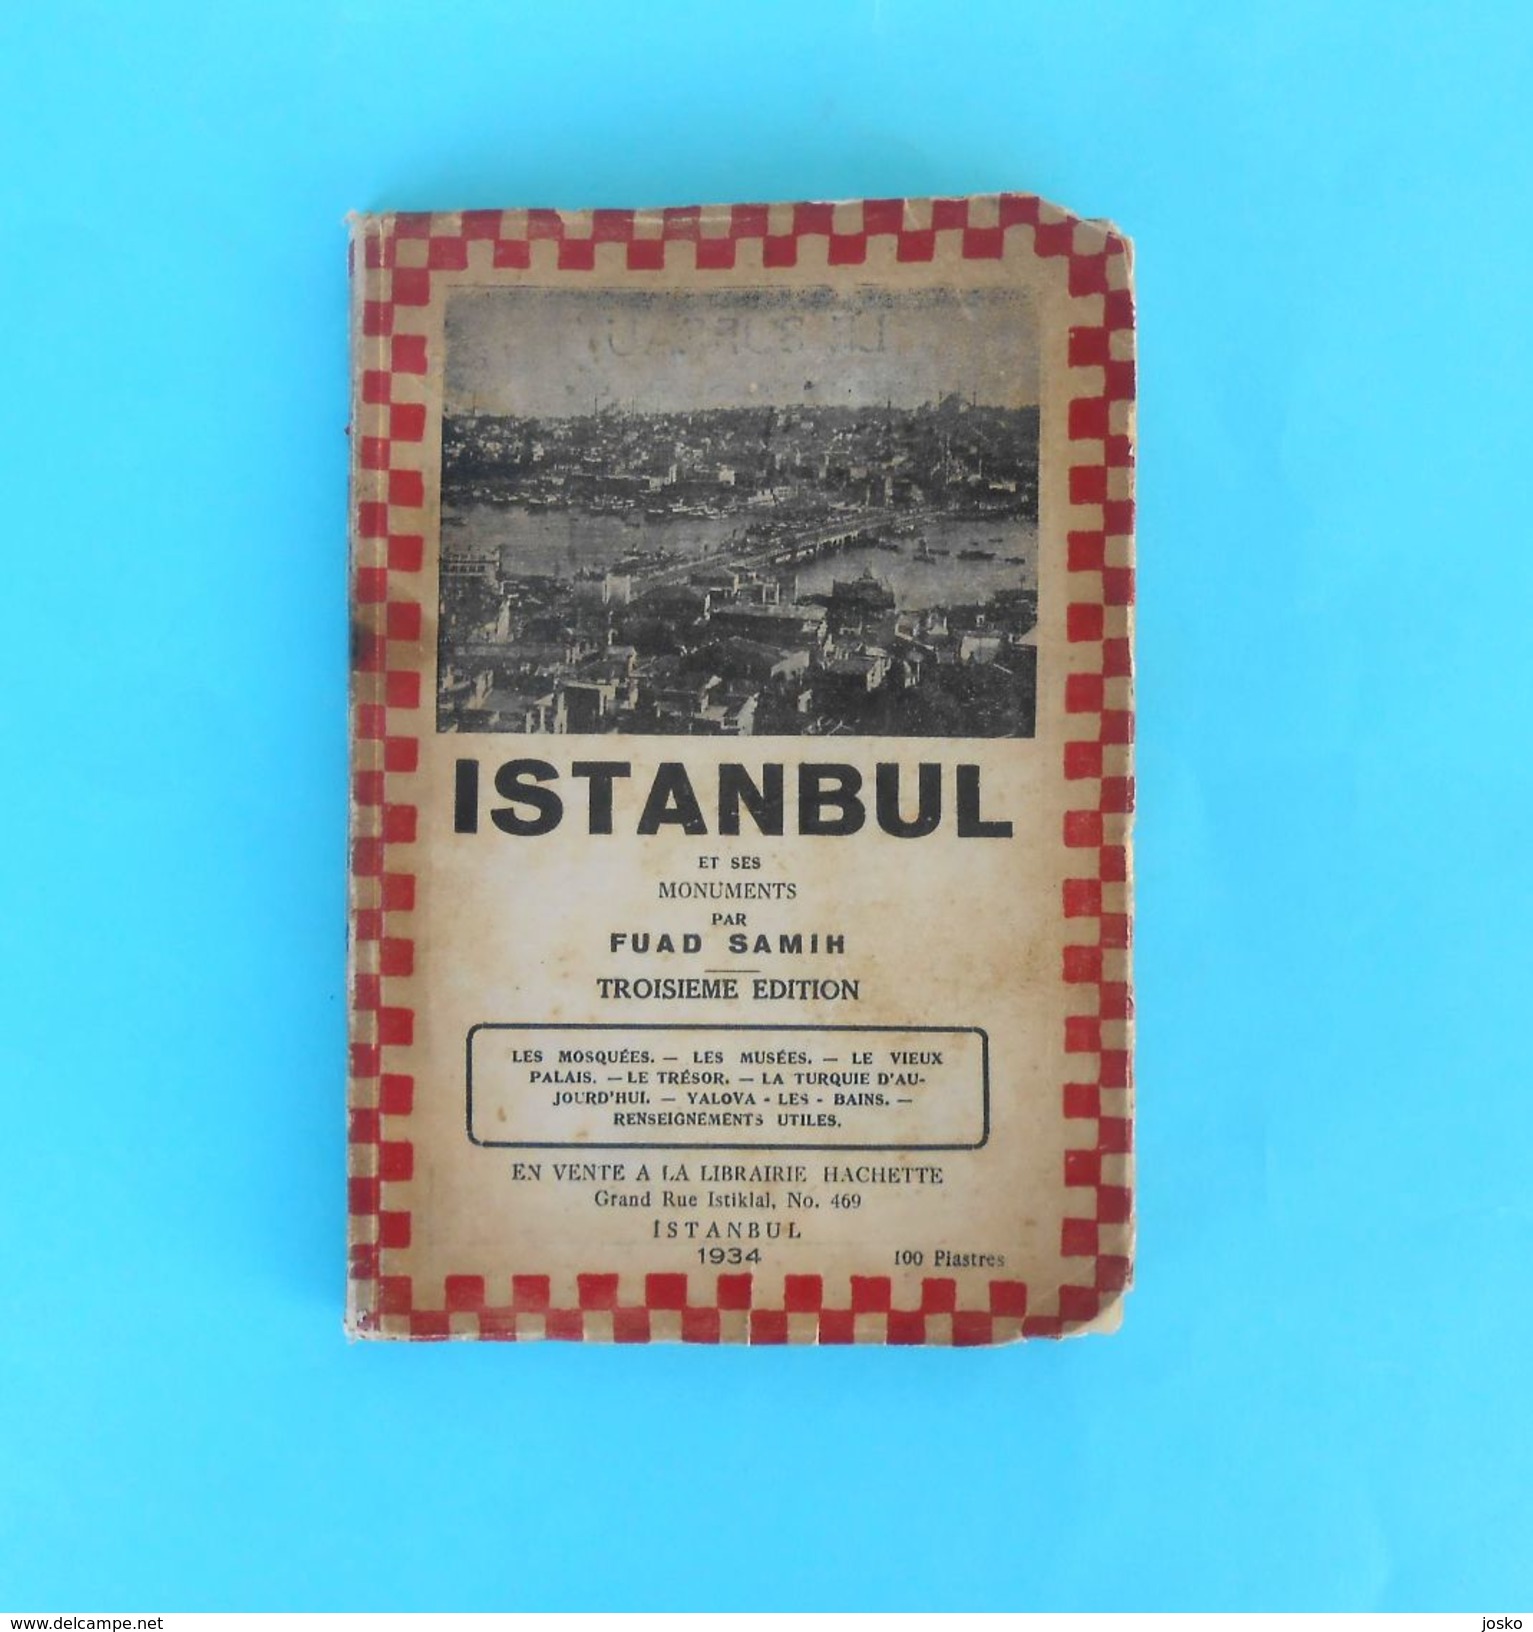 ISTANBUL ( Turkey ) - 1934. Original Vintage City Guide - Mosques, Museums, Palaces Turkiye Turquie Turchia Turkish RRR - Reiseprospekte